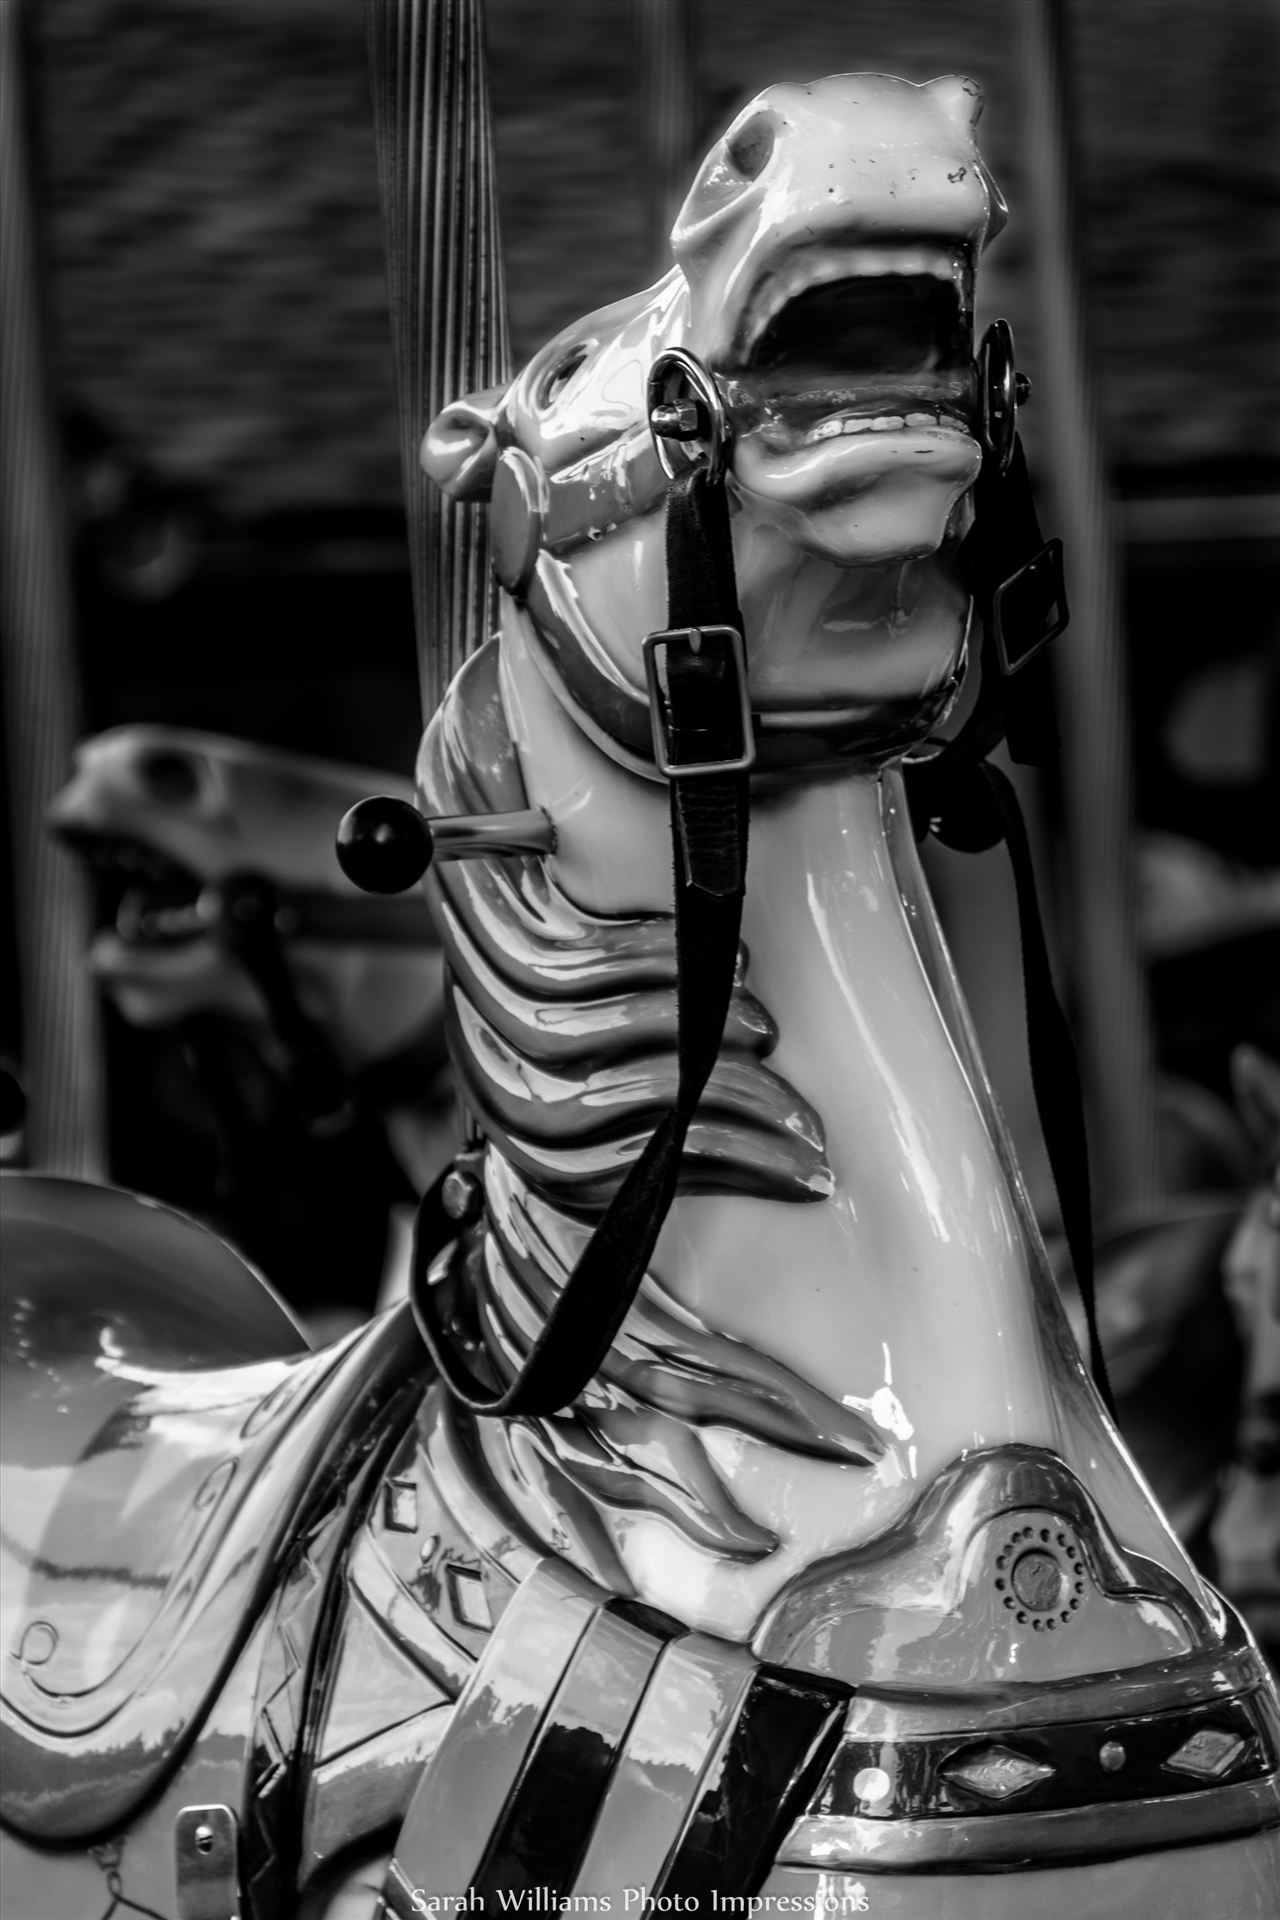 Carousel Horse BW.jpg  by Sarah Williams